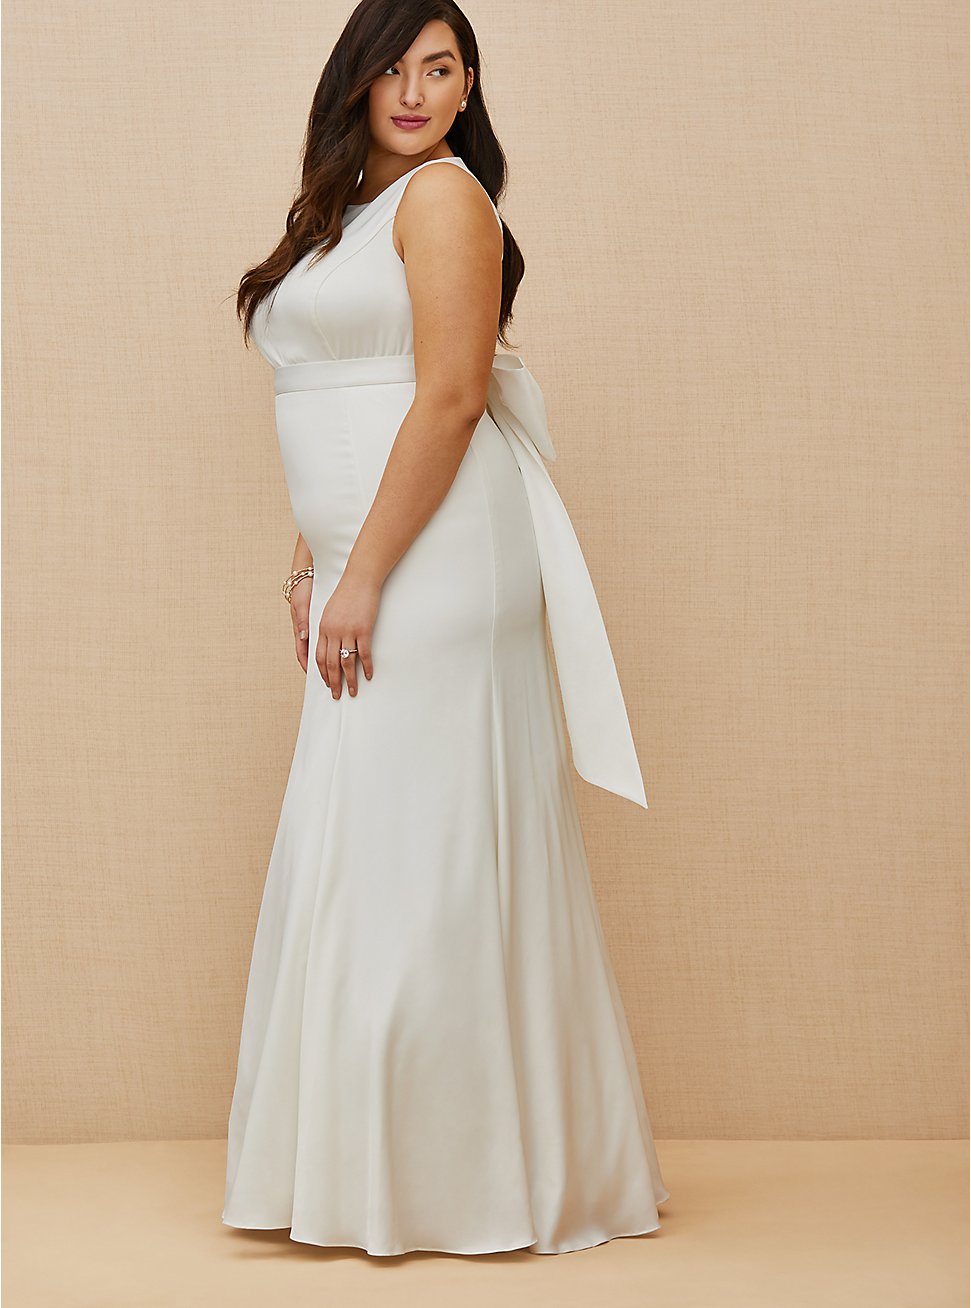 Plus Size Ivory Satin Bow Back Mermaid Wedding Dress, CLOUD DANCER, hi-res